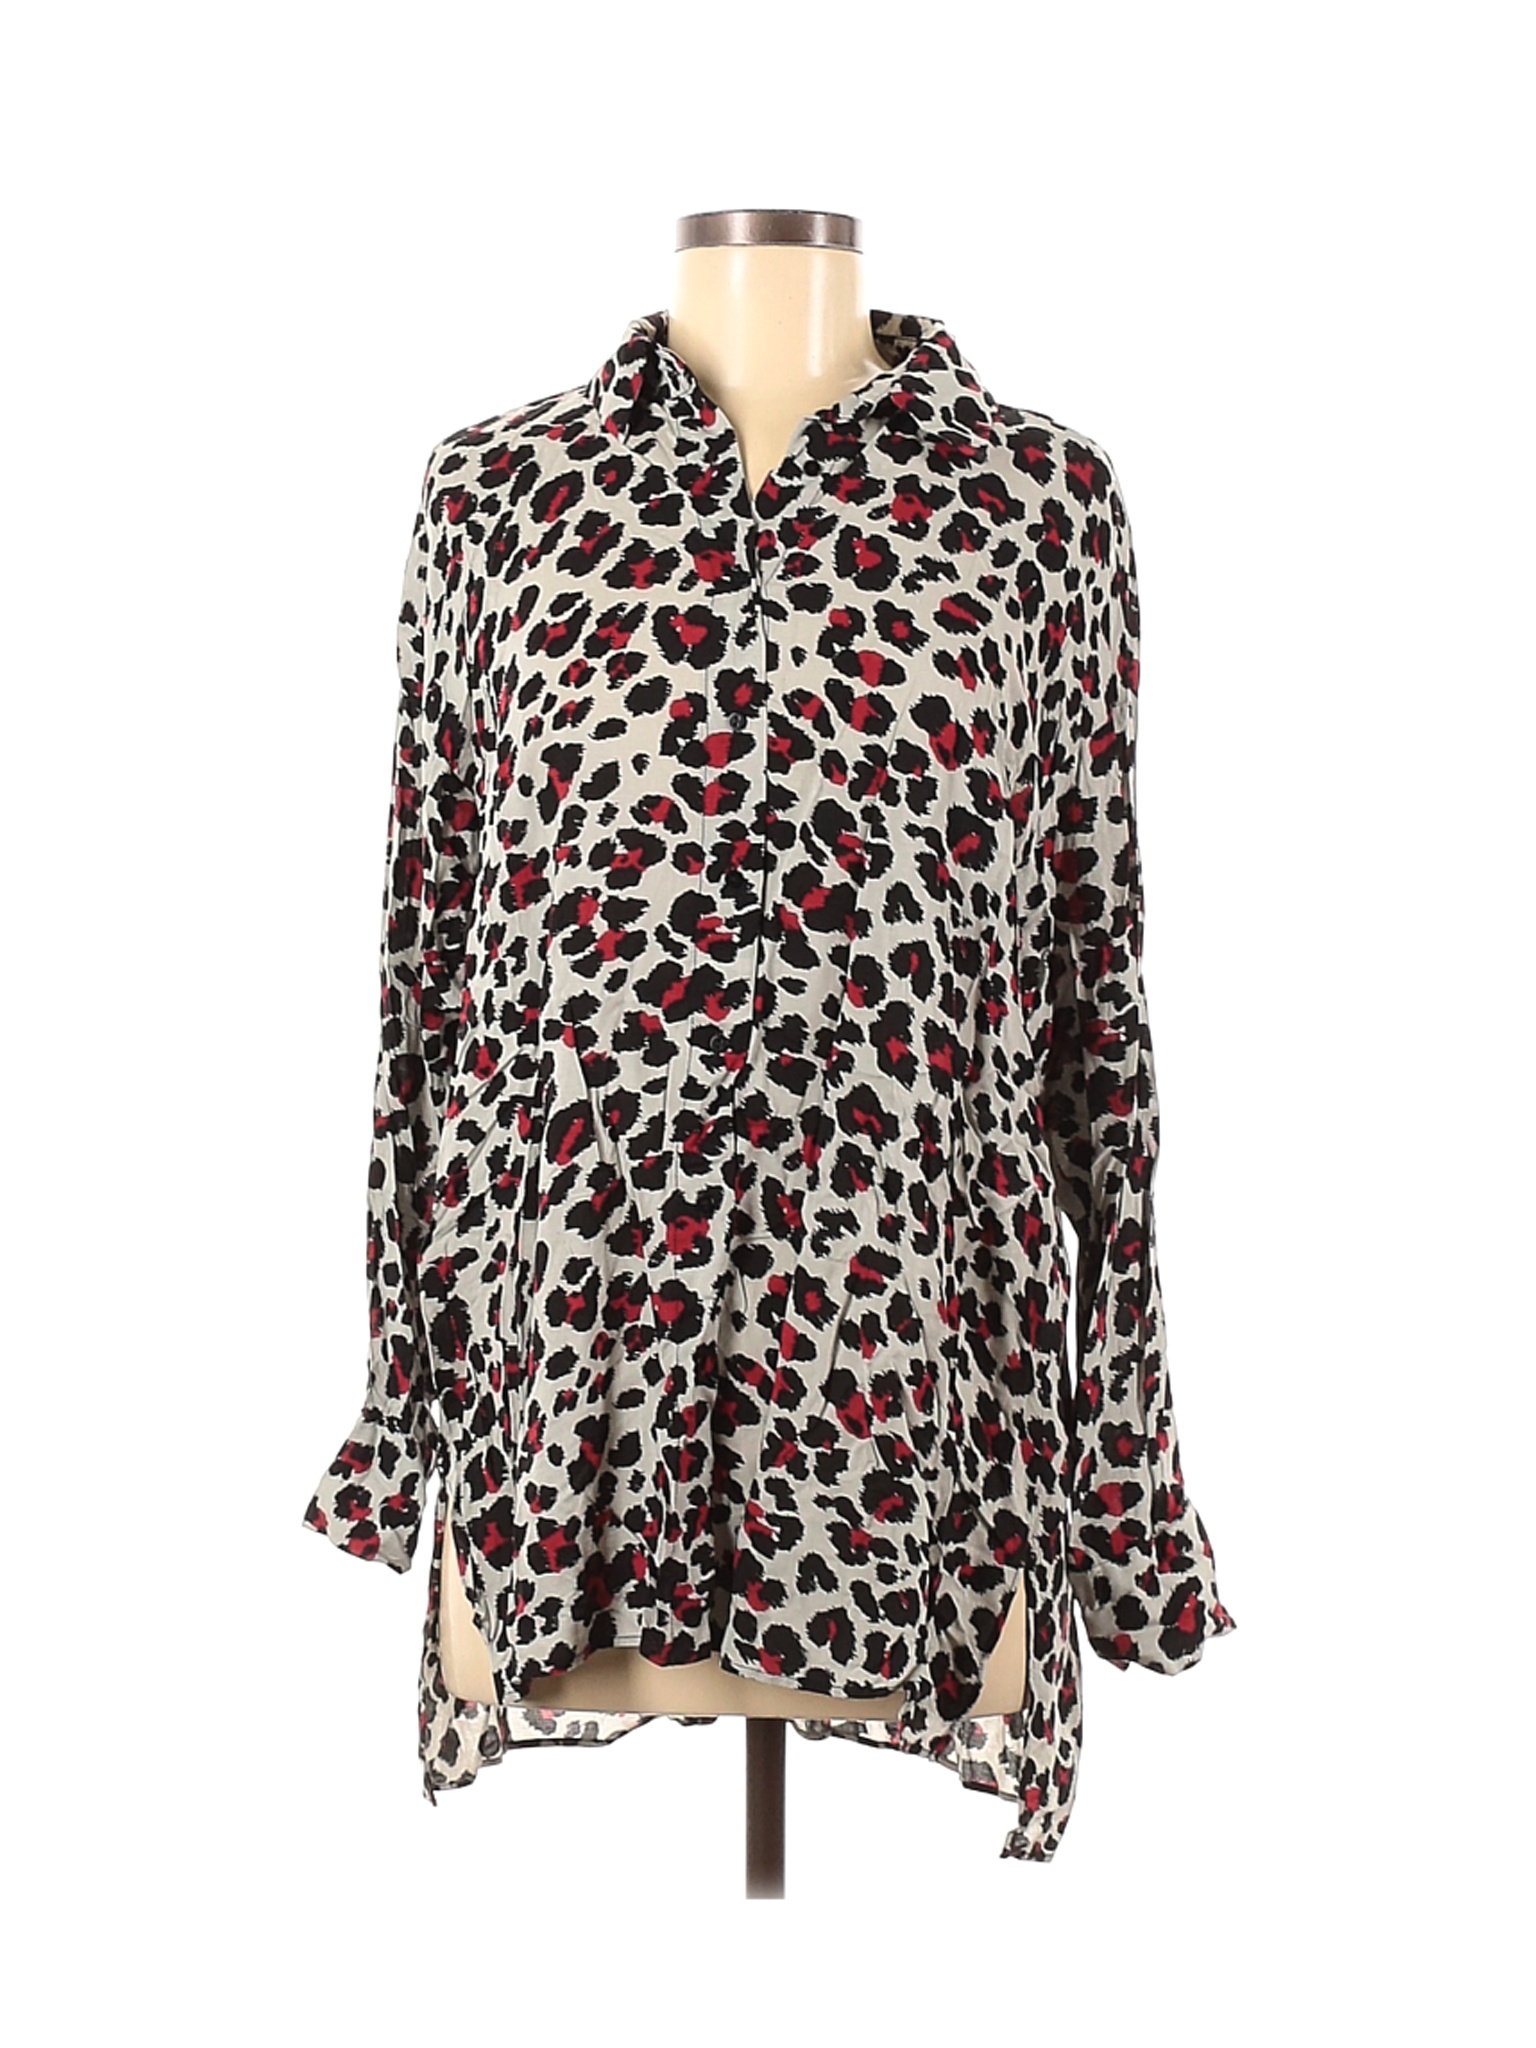 Zara Women Ivory Long Sleeve Button-Down Shirt M | eBay